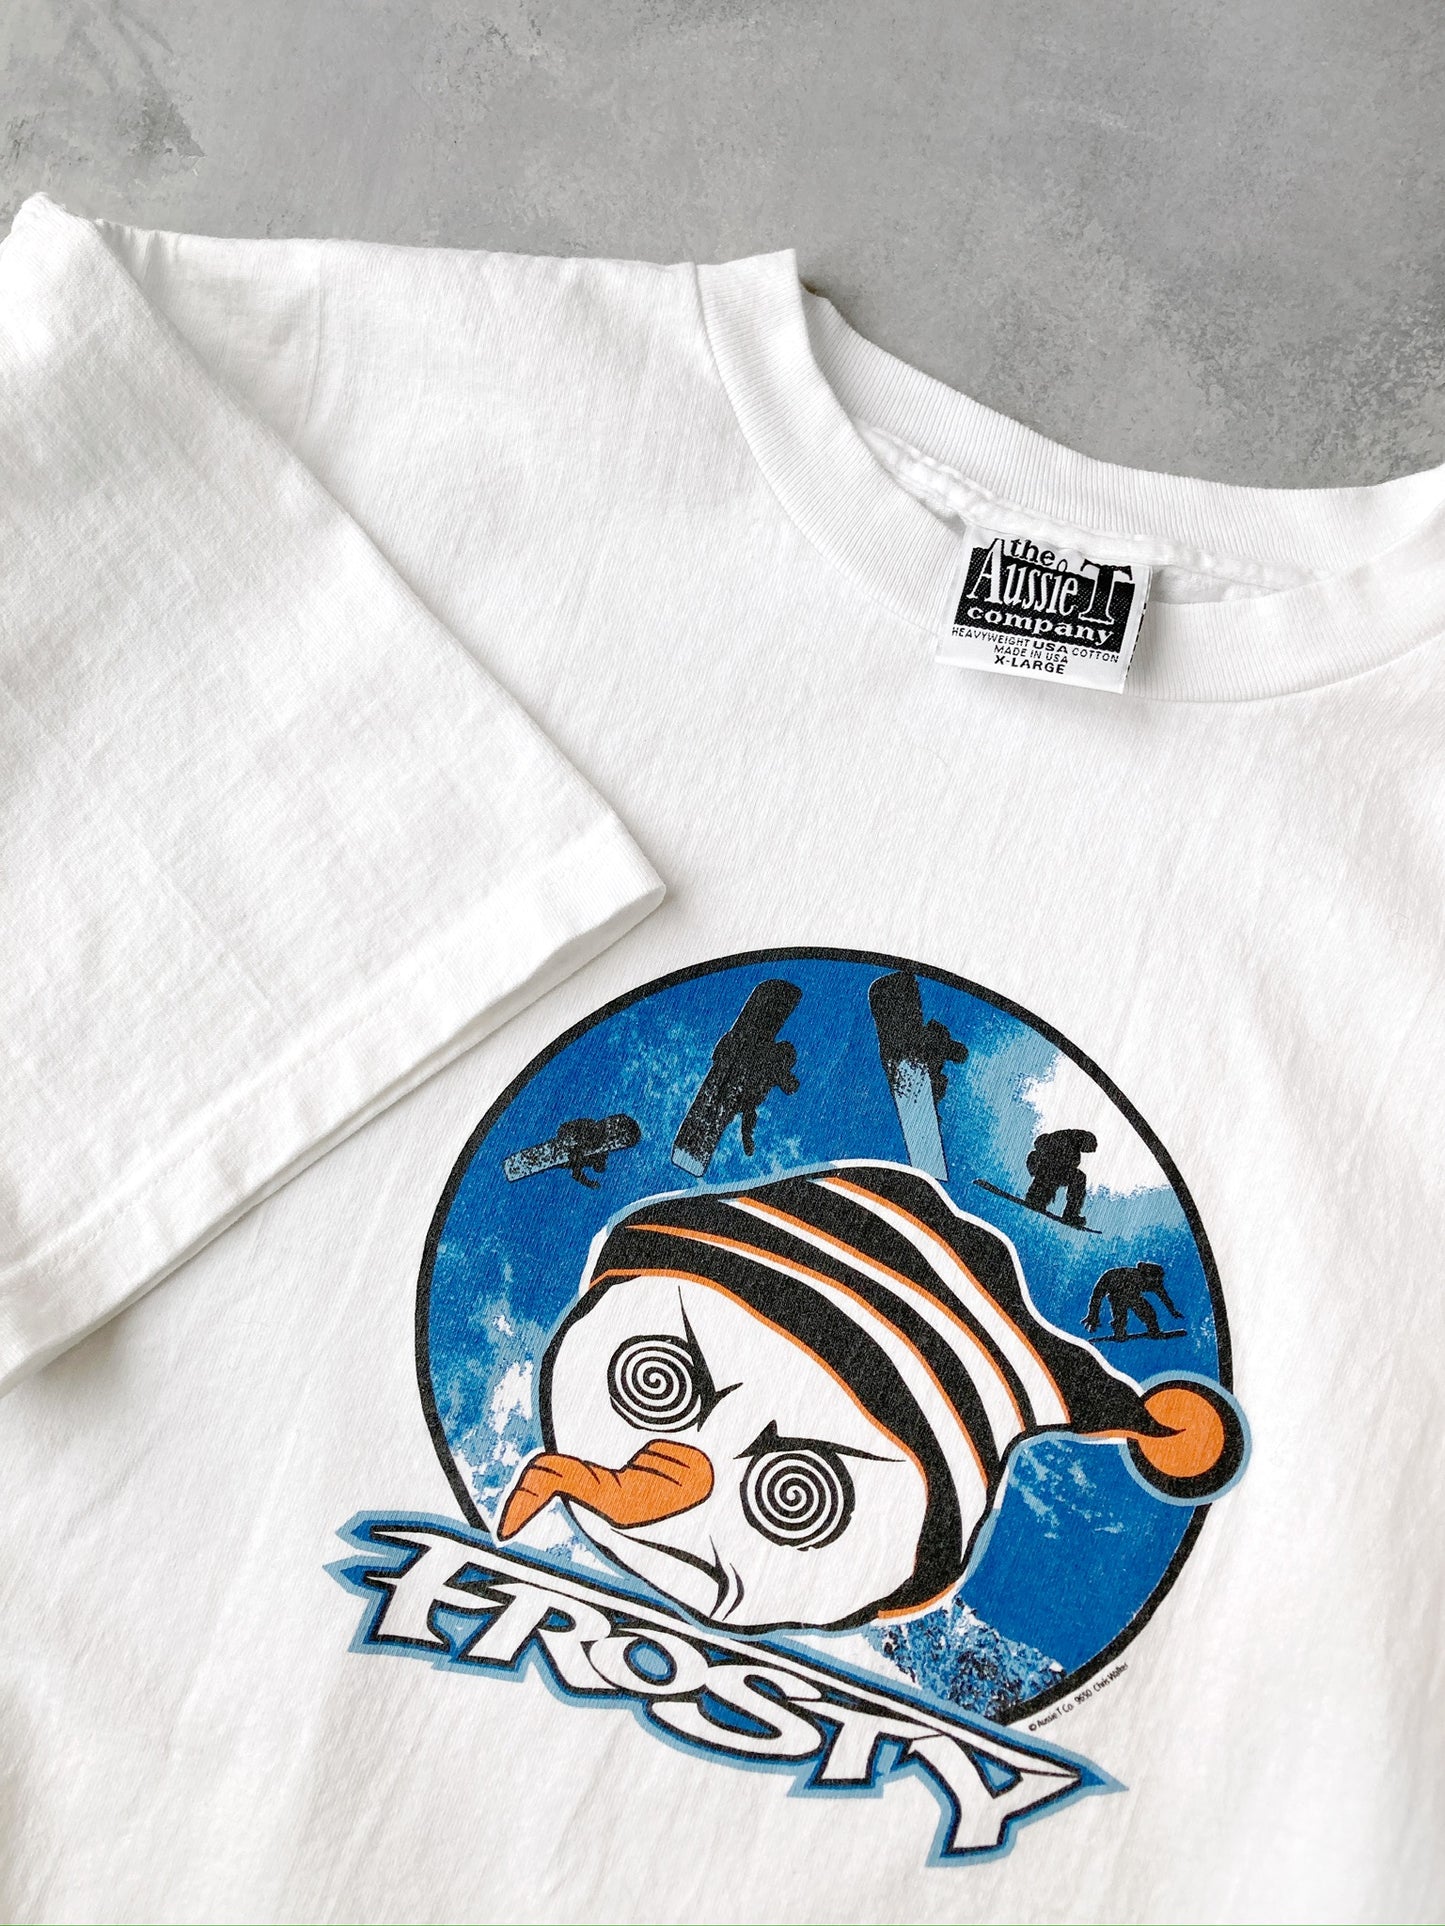 Frosty Snowboarding T-Shirt 90's - XL / XXL